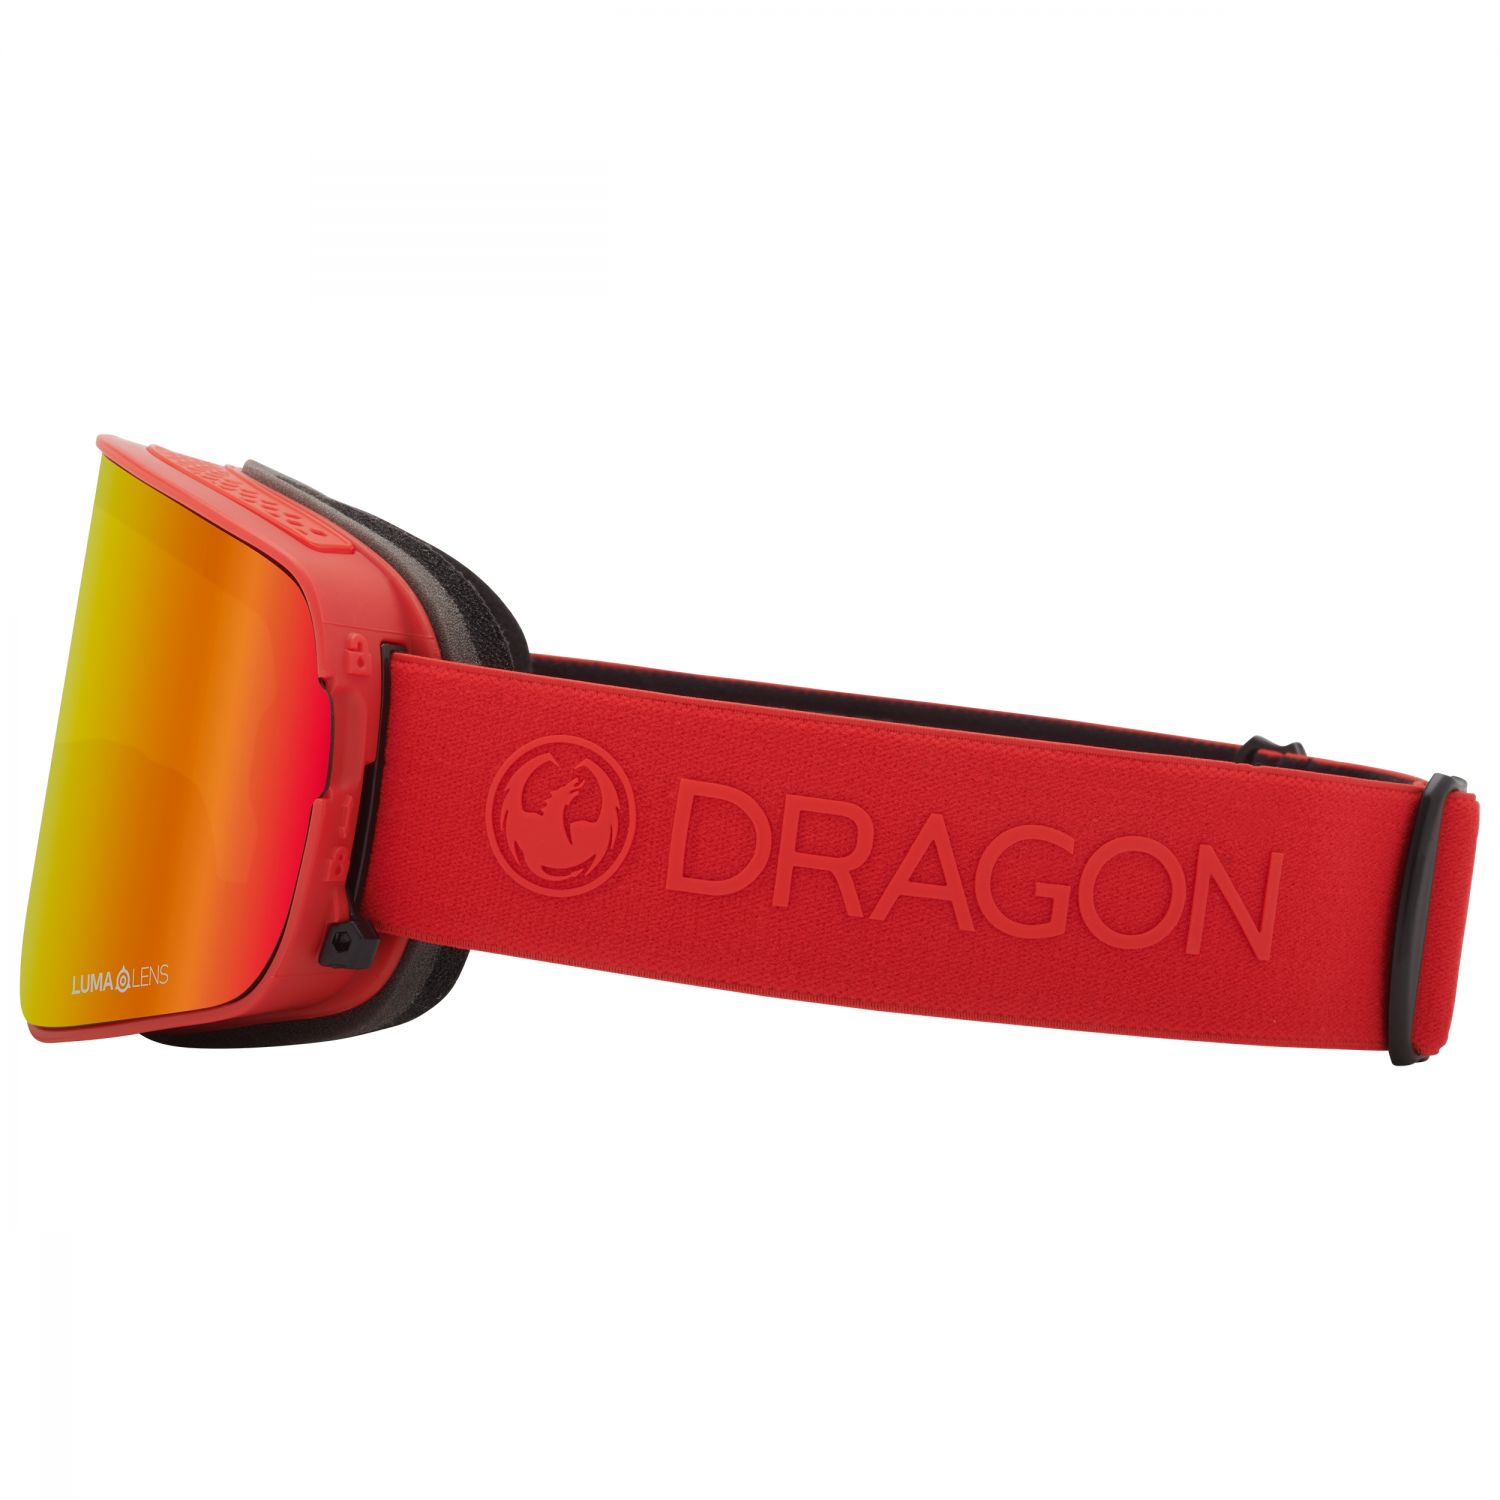 Dragon NFX2, masque de ski, saffron